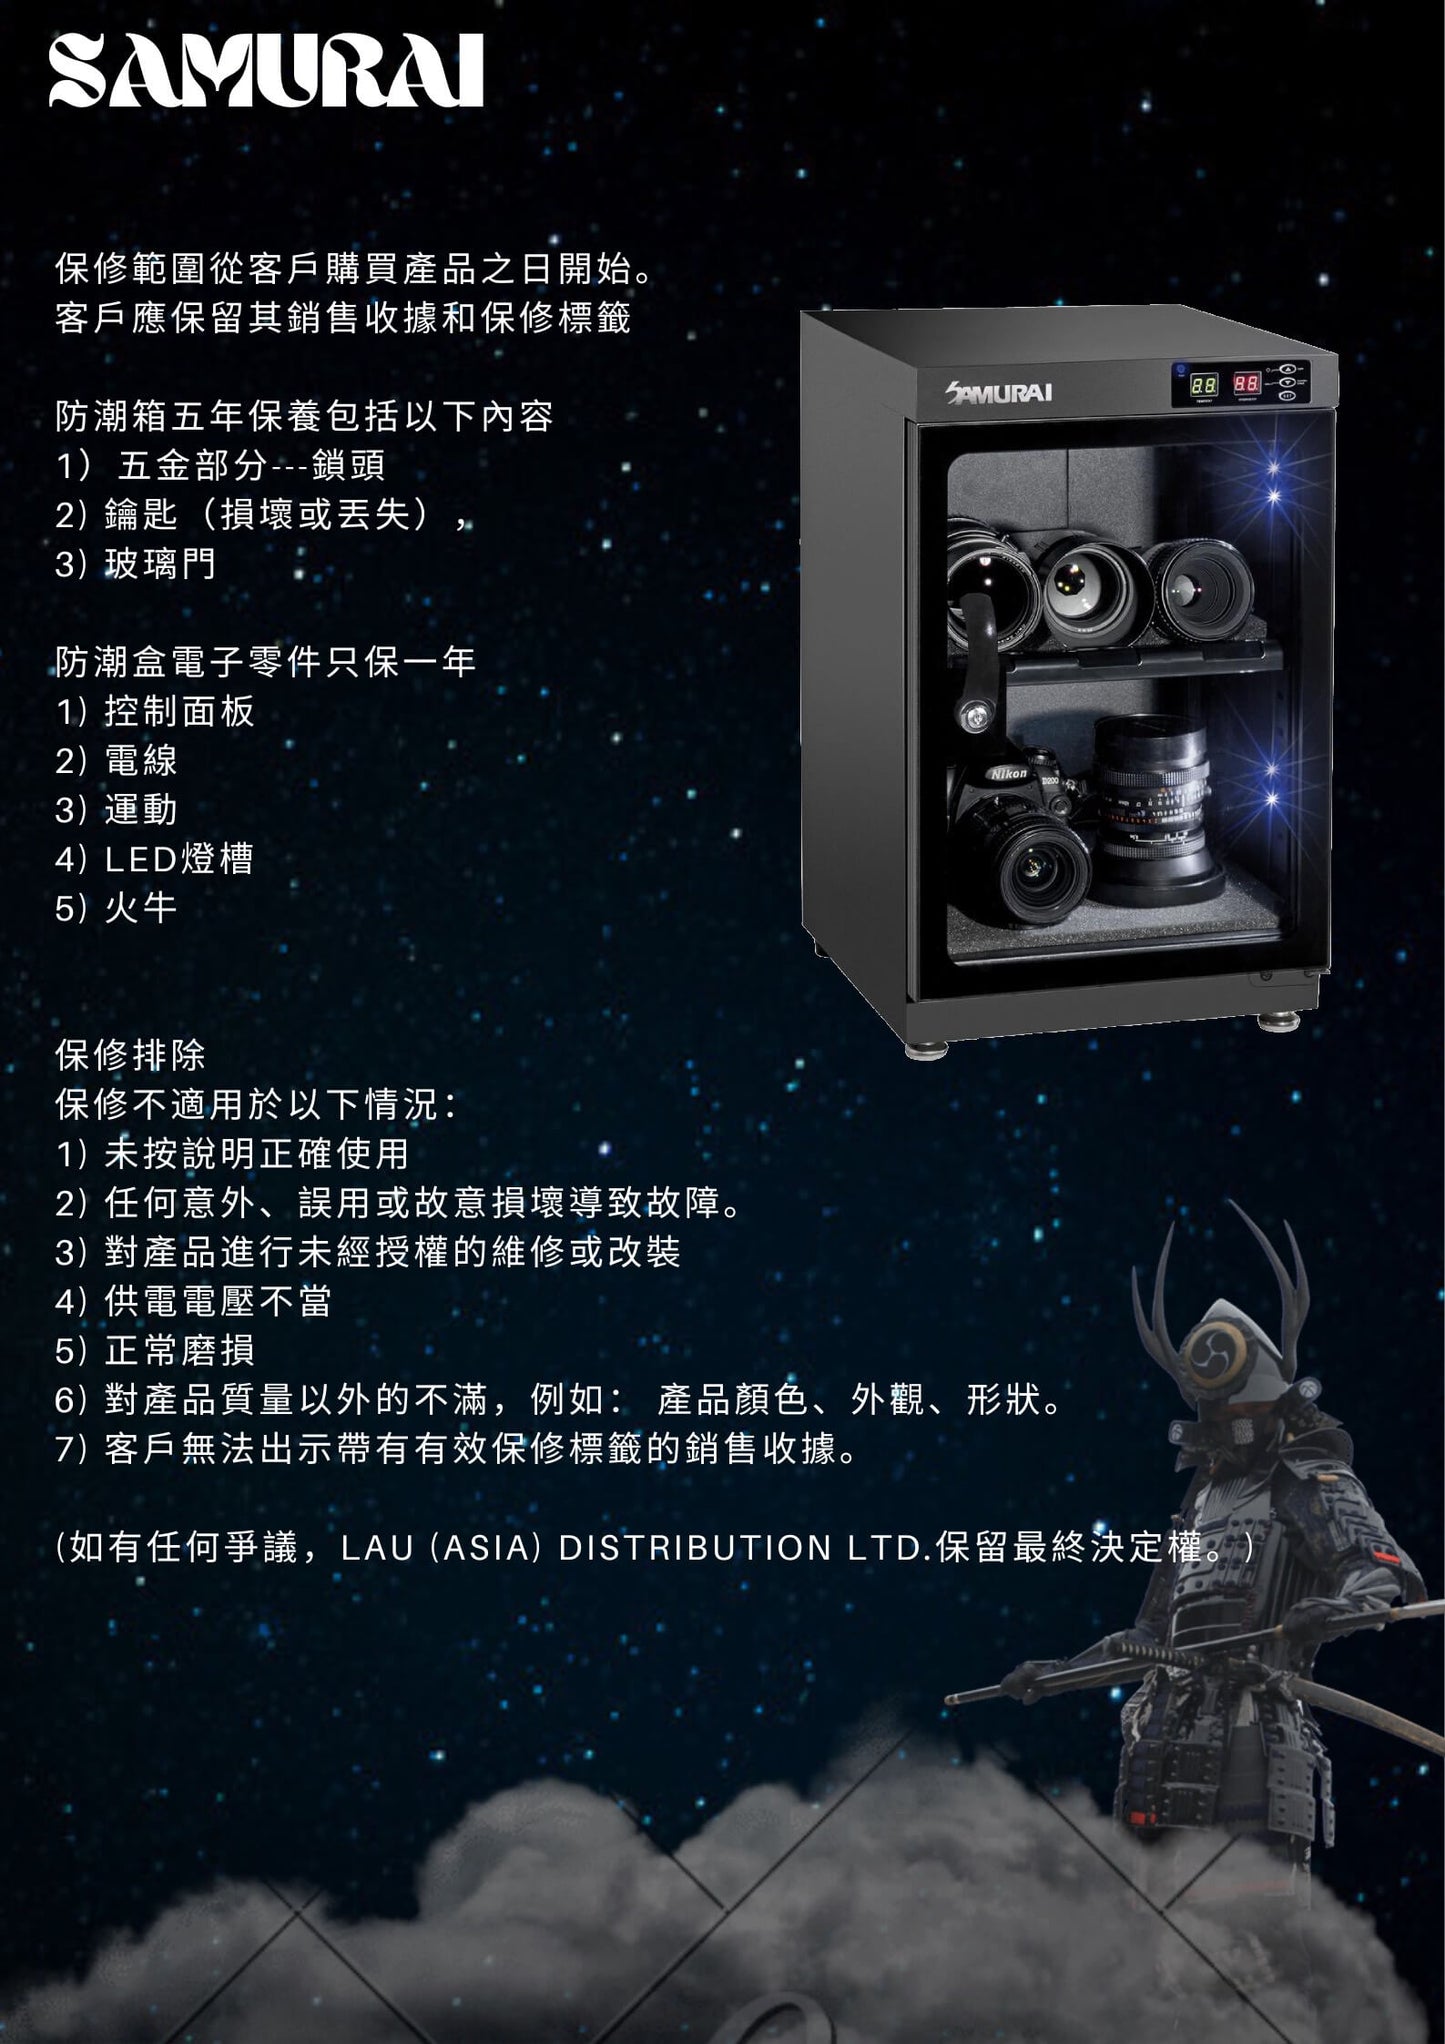 Samurai GP5-25L Dry Cabinet